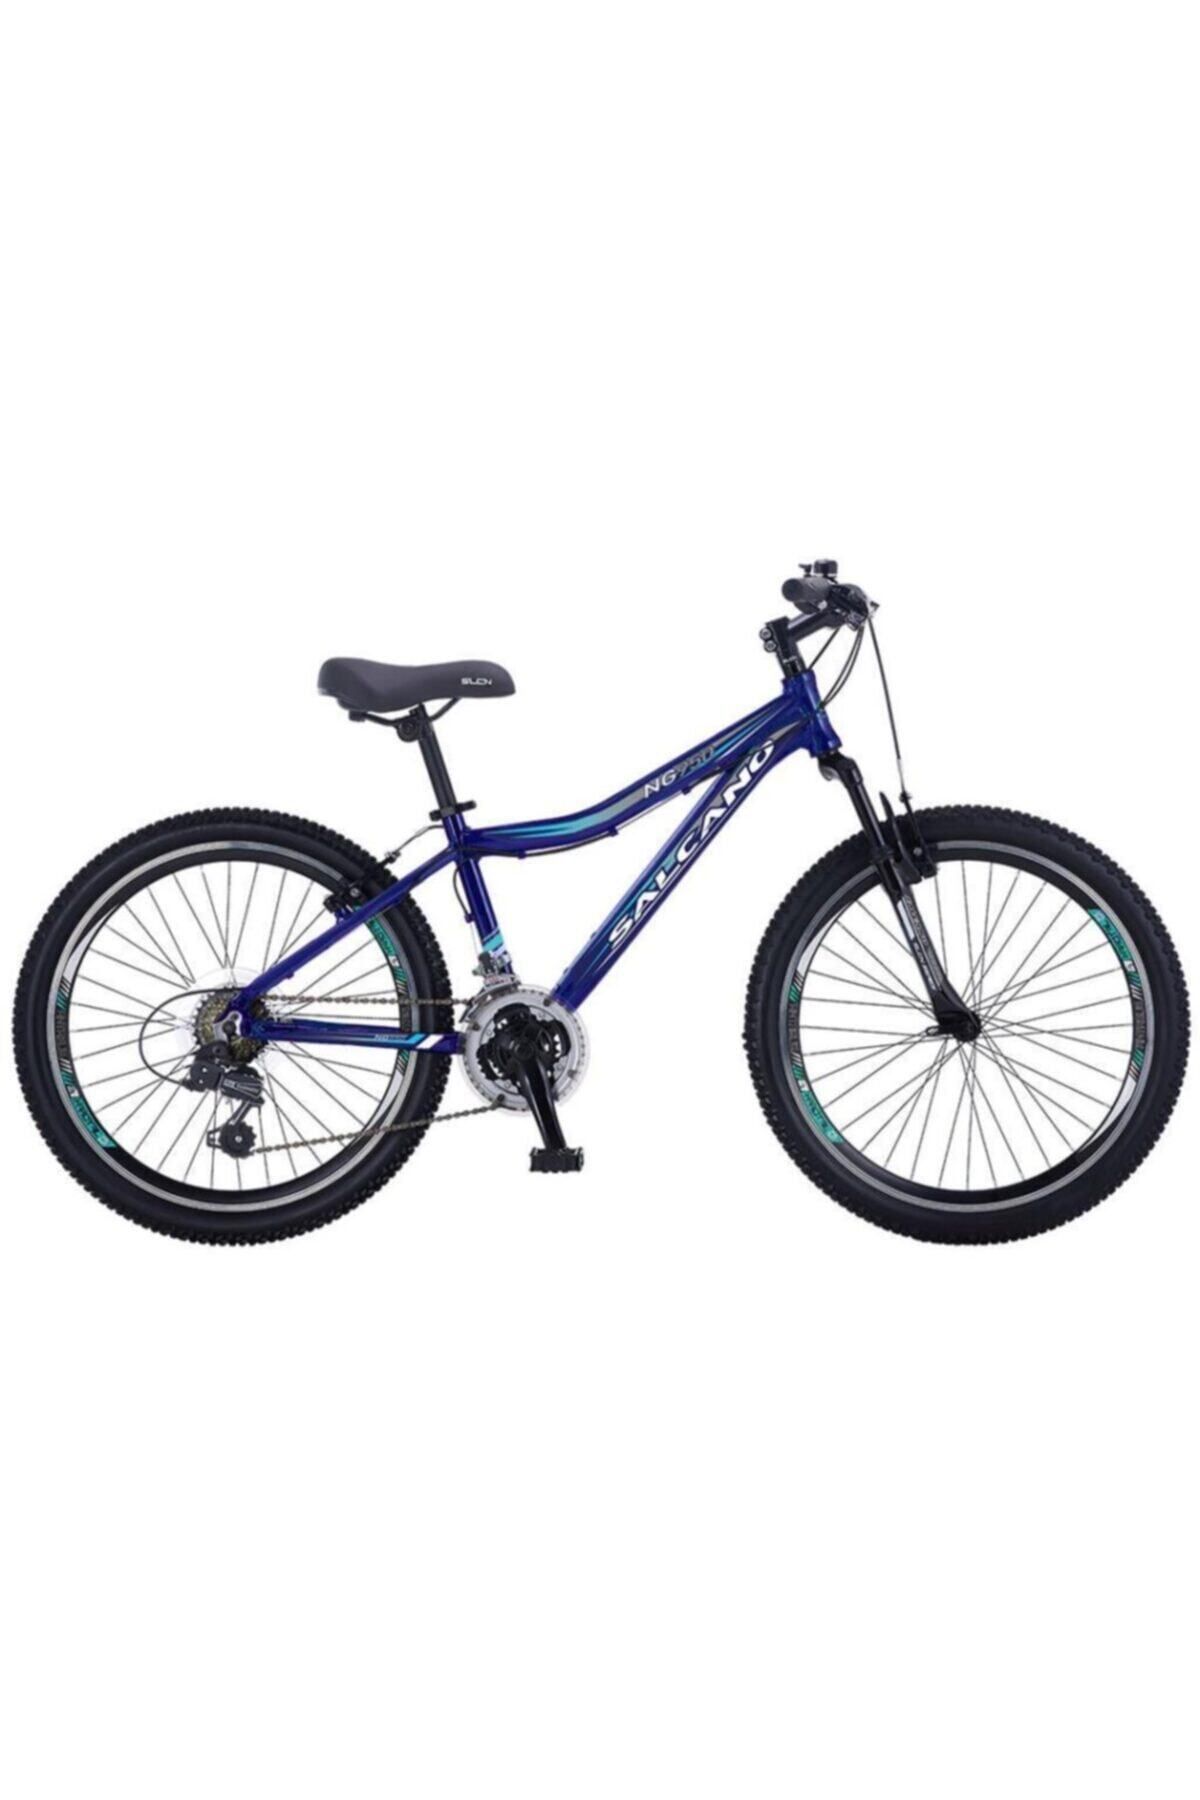 Salcano NG 950 20 Shimano Vitesli Alüminyum çocuk bisikleti mavi